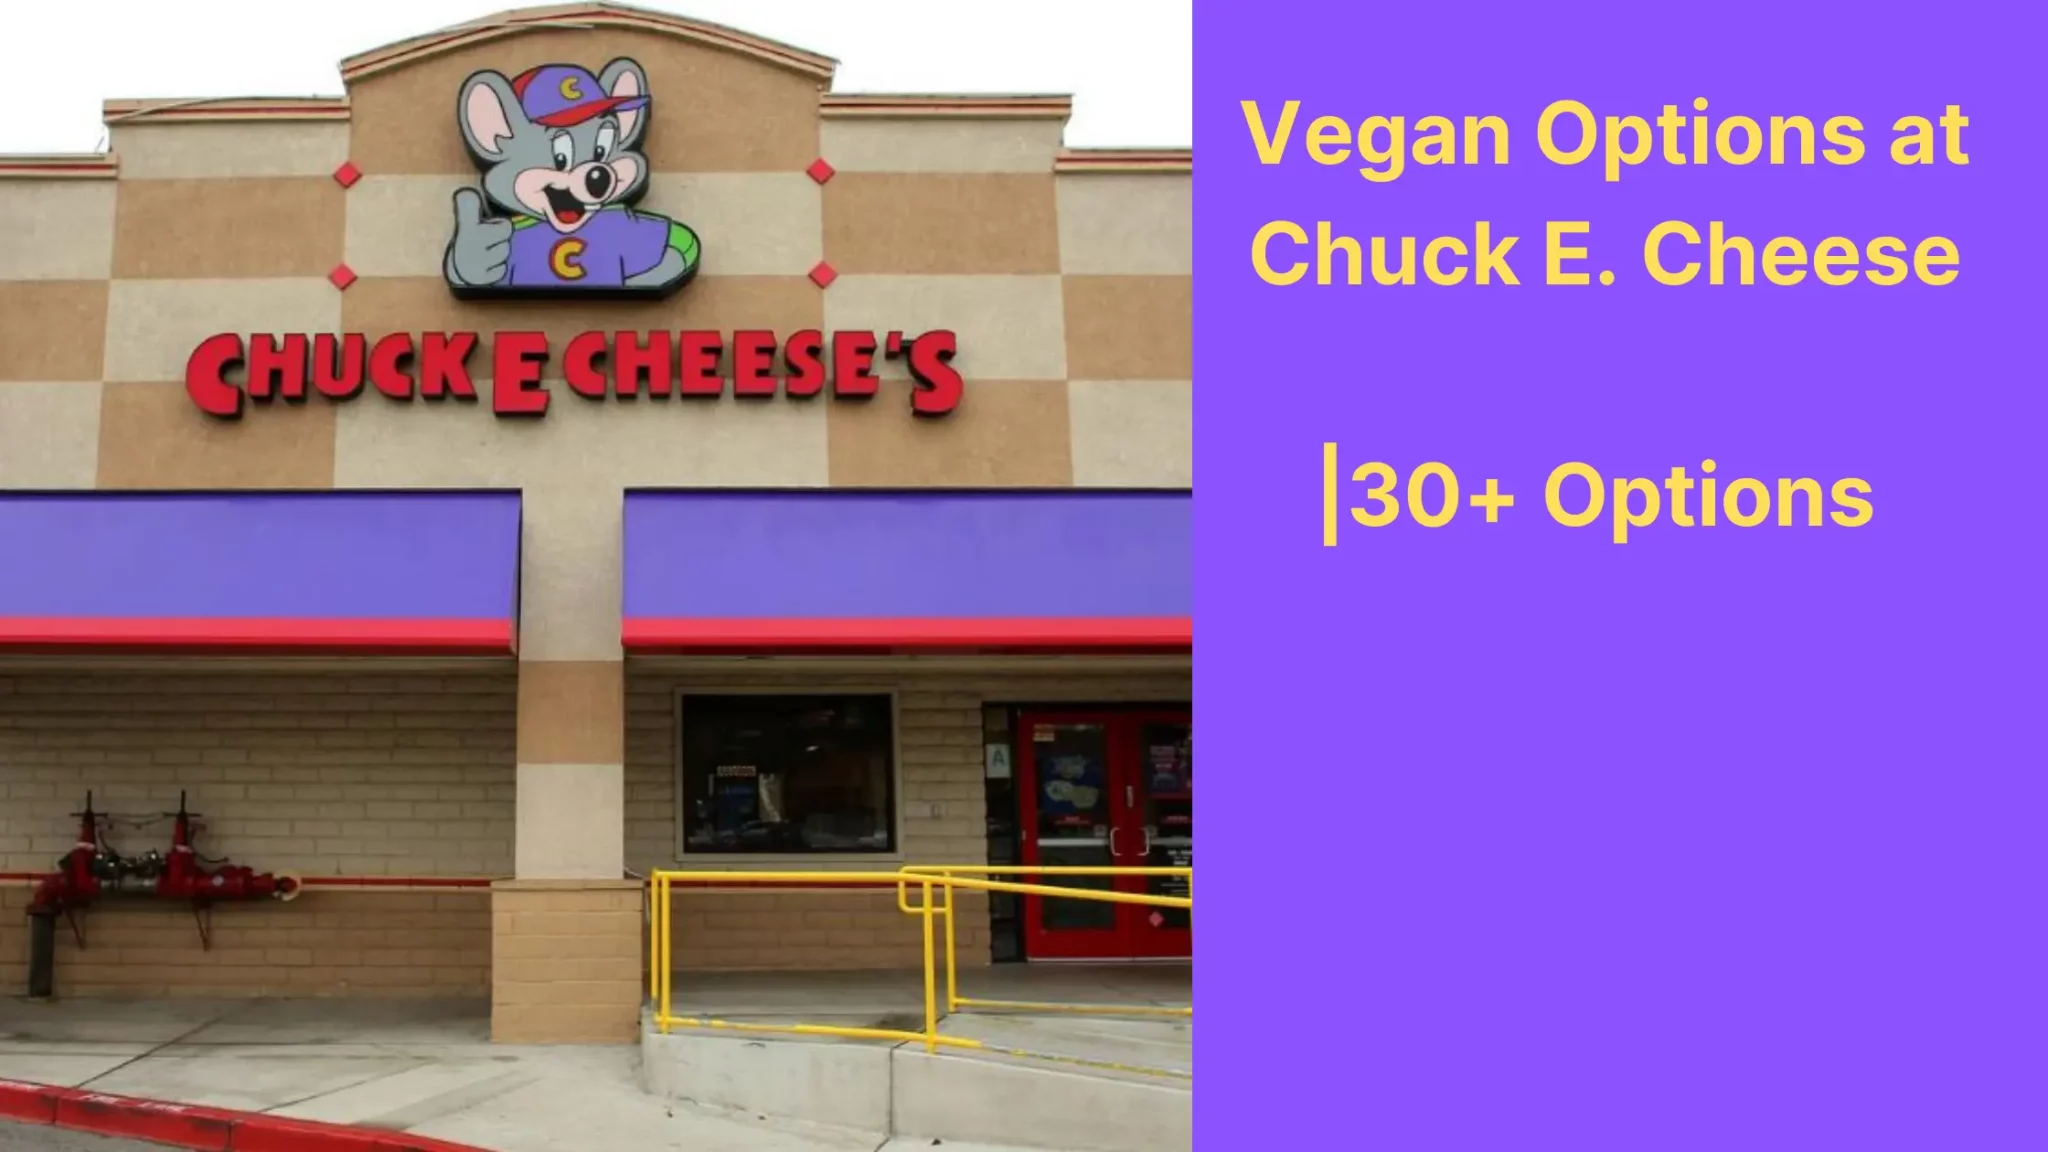 Vegan Options at Chuck E. Cheese